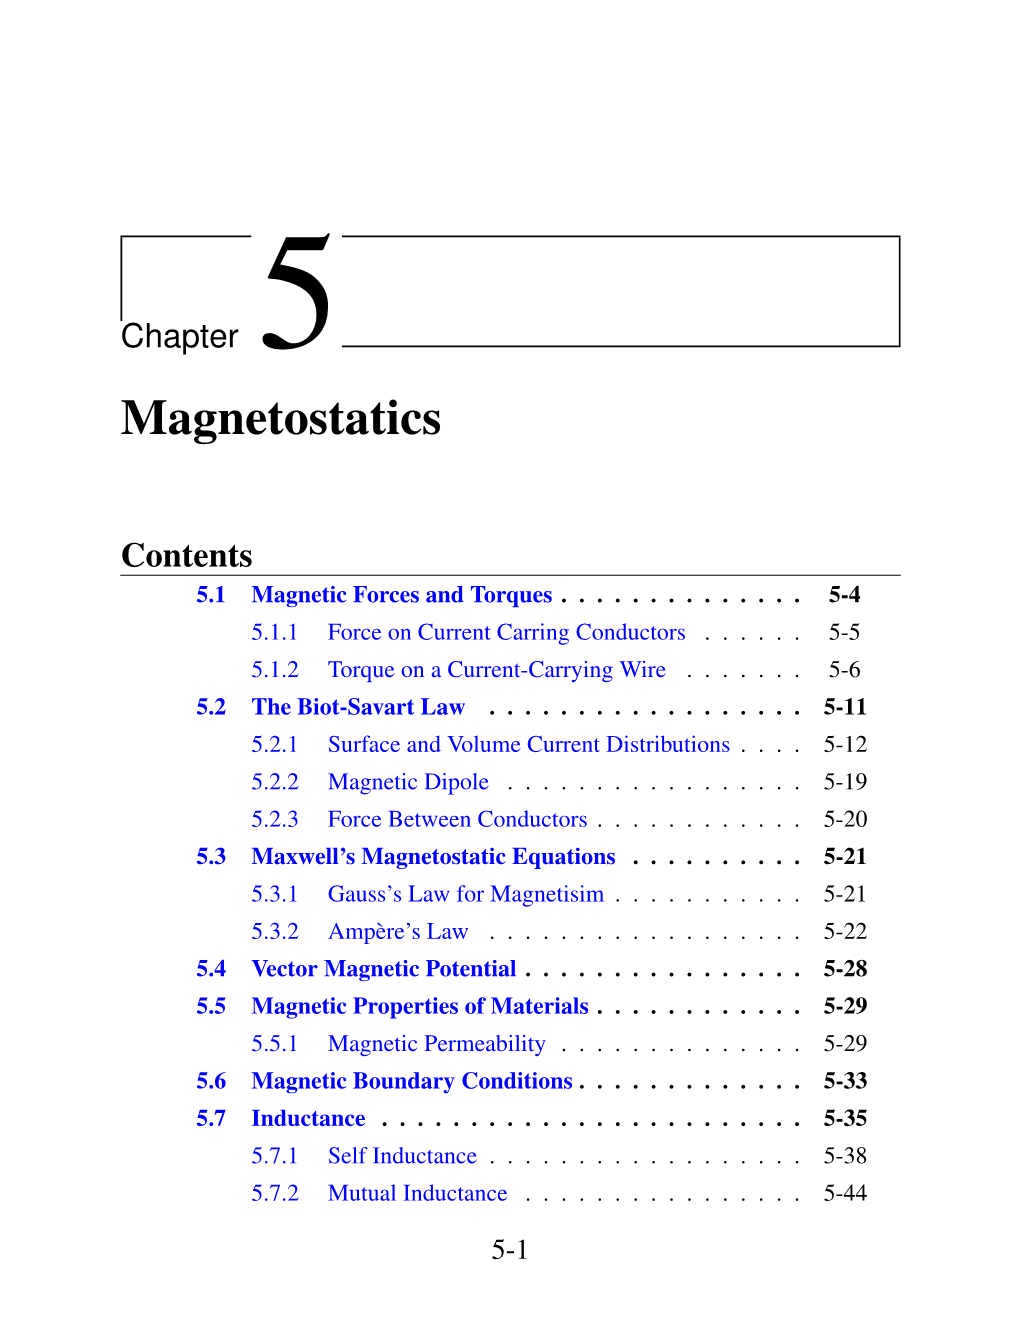 Magnetostatics